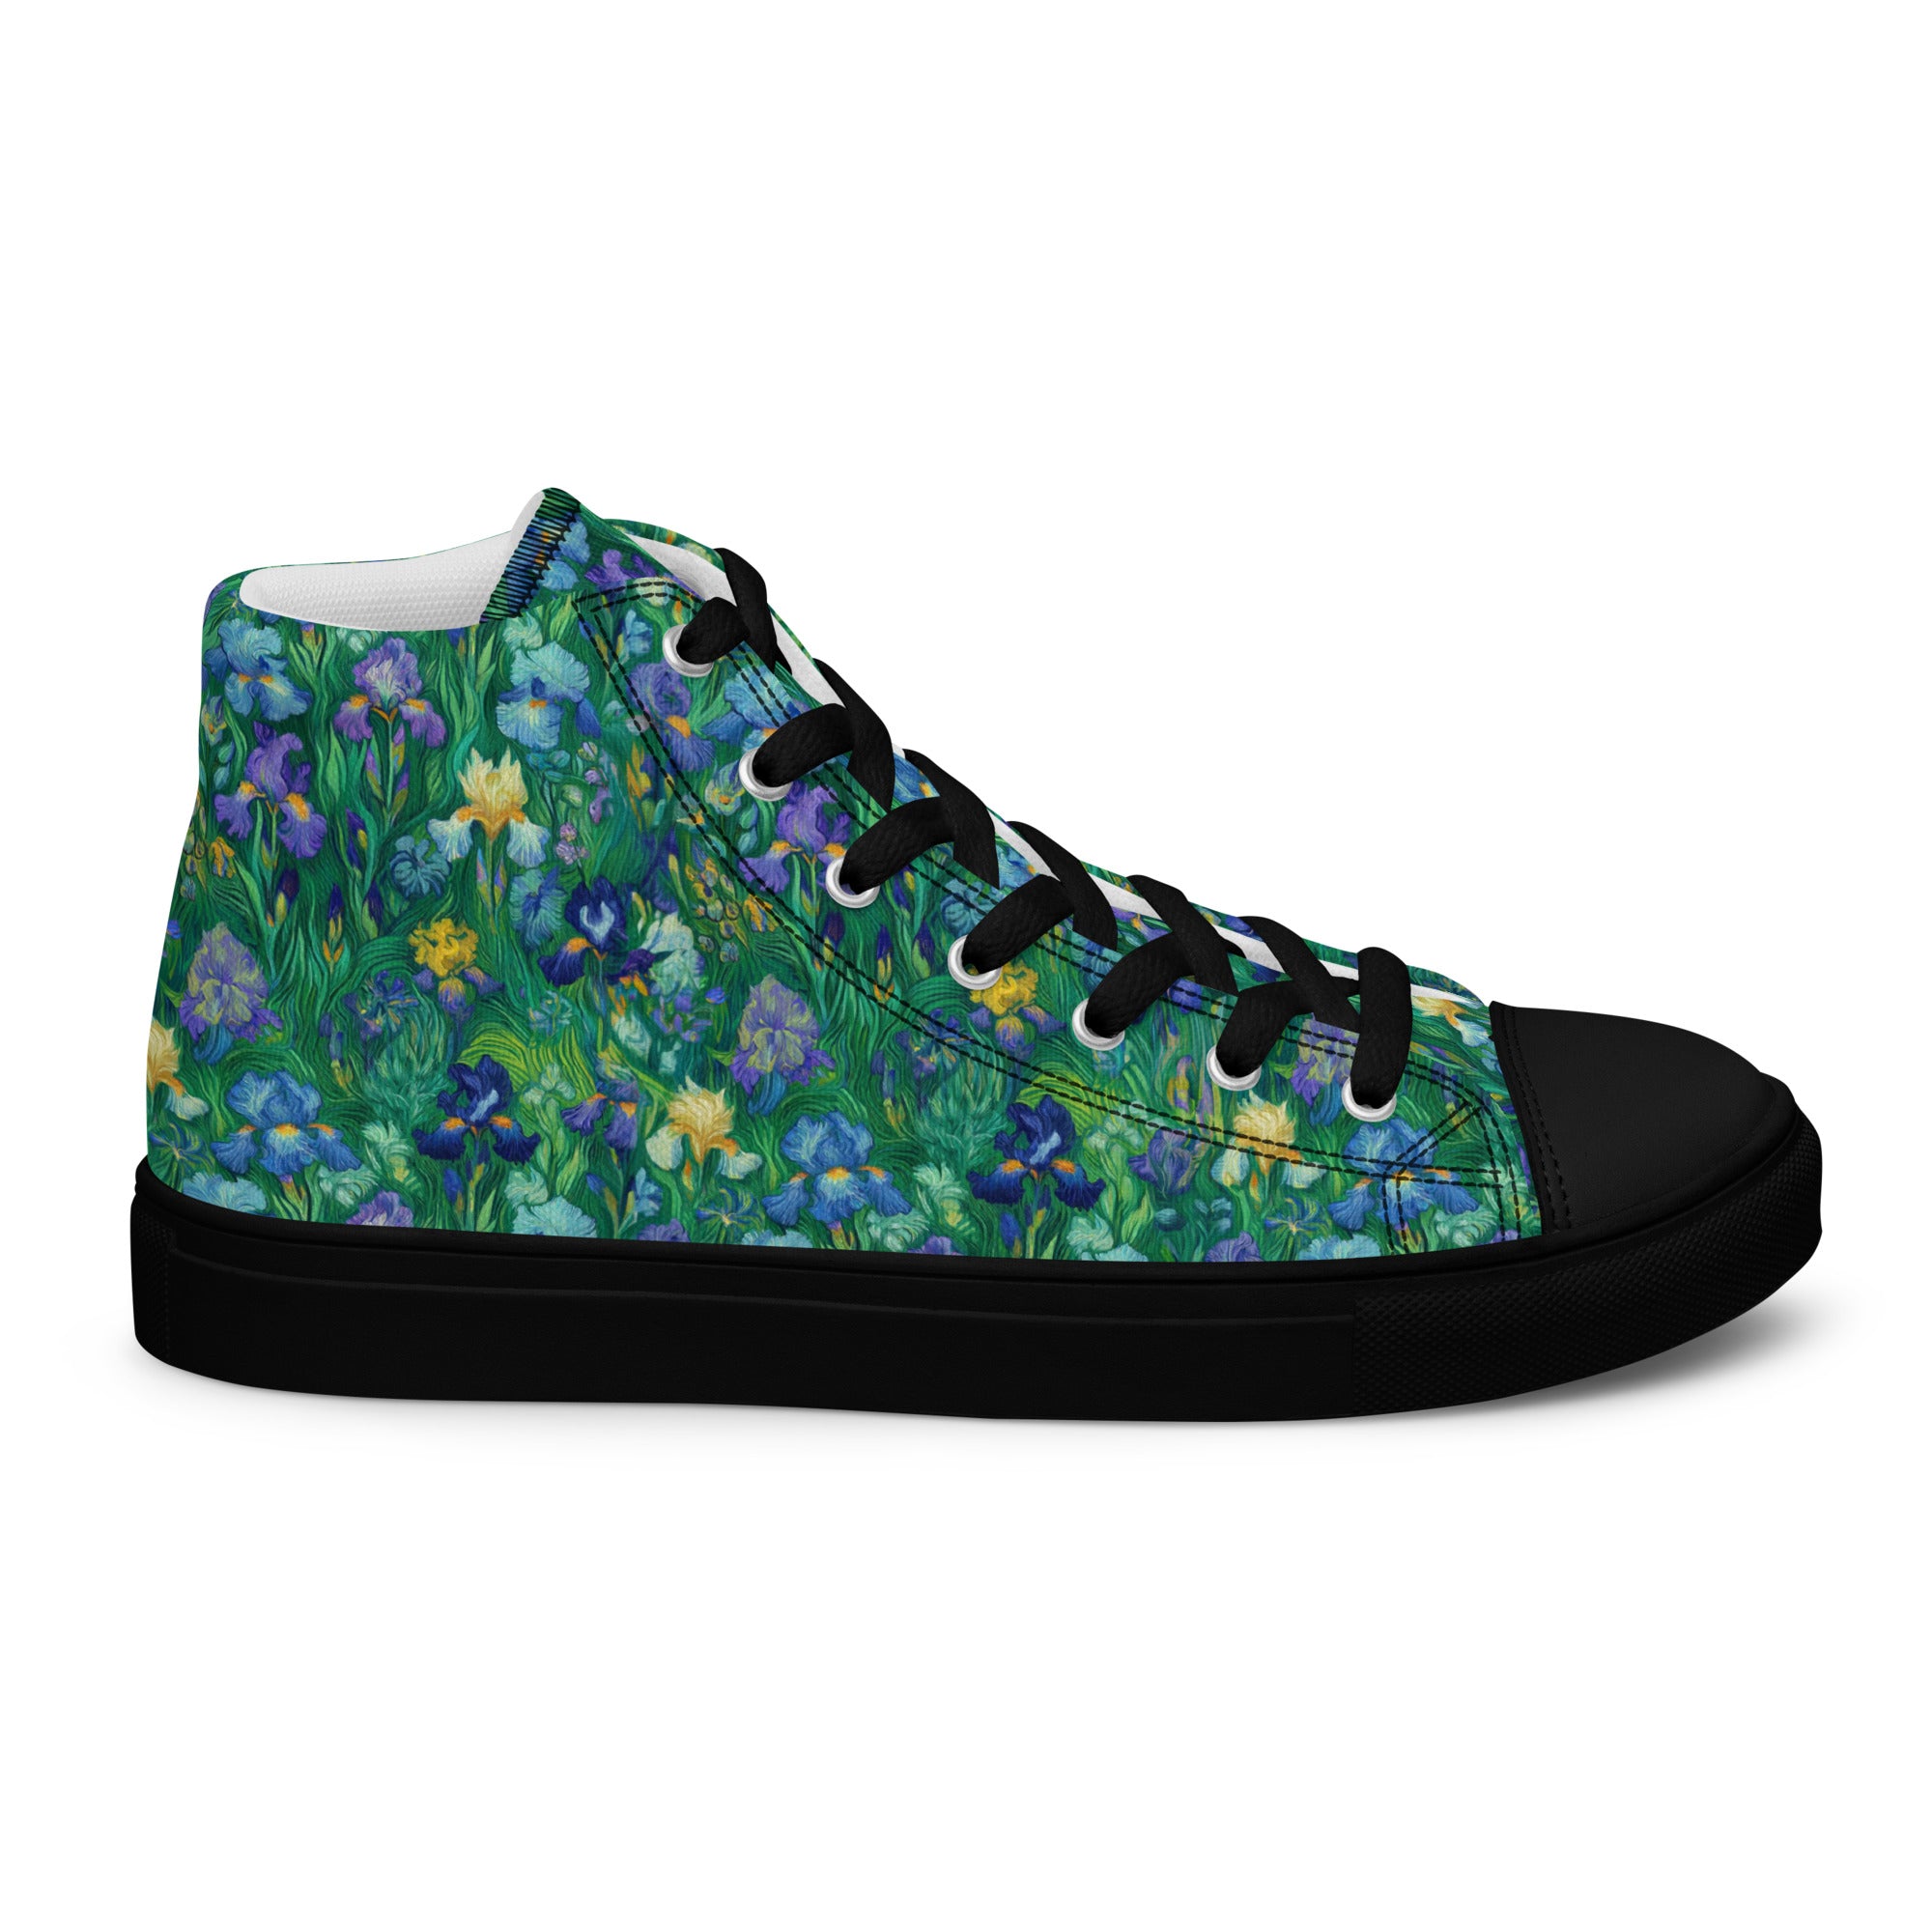 Vincent van Gogh 'Irises' High Top Shoes | Premium Art High Top Sneakers for Men